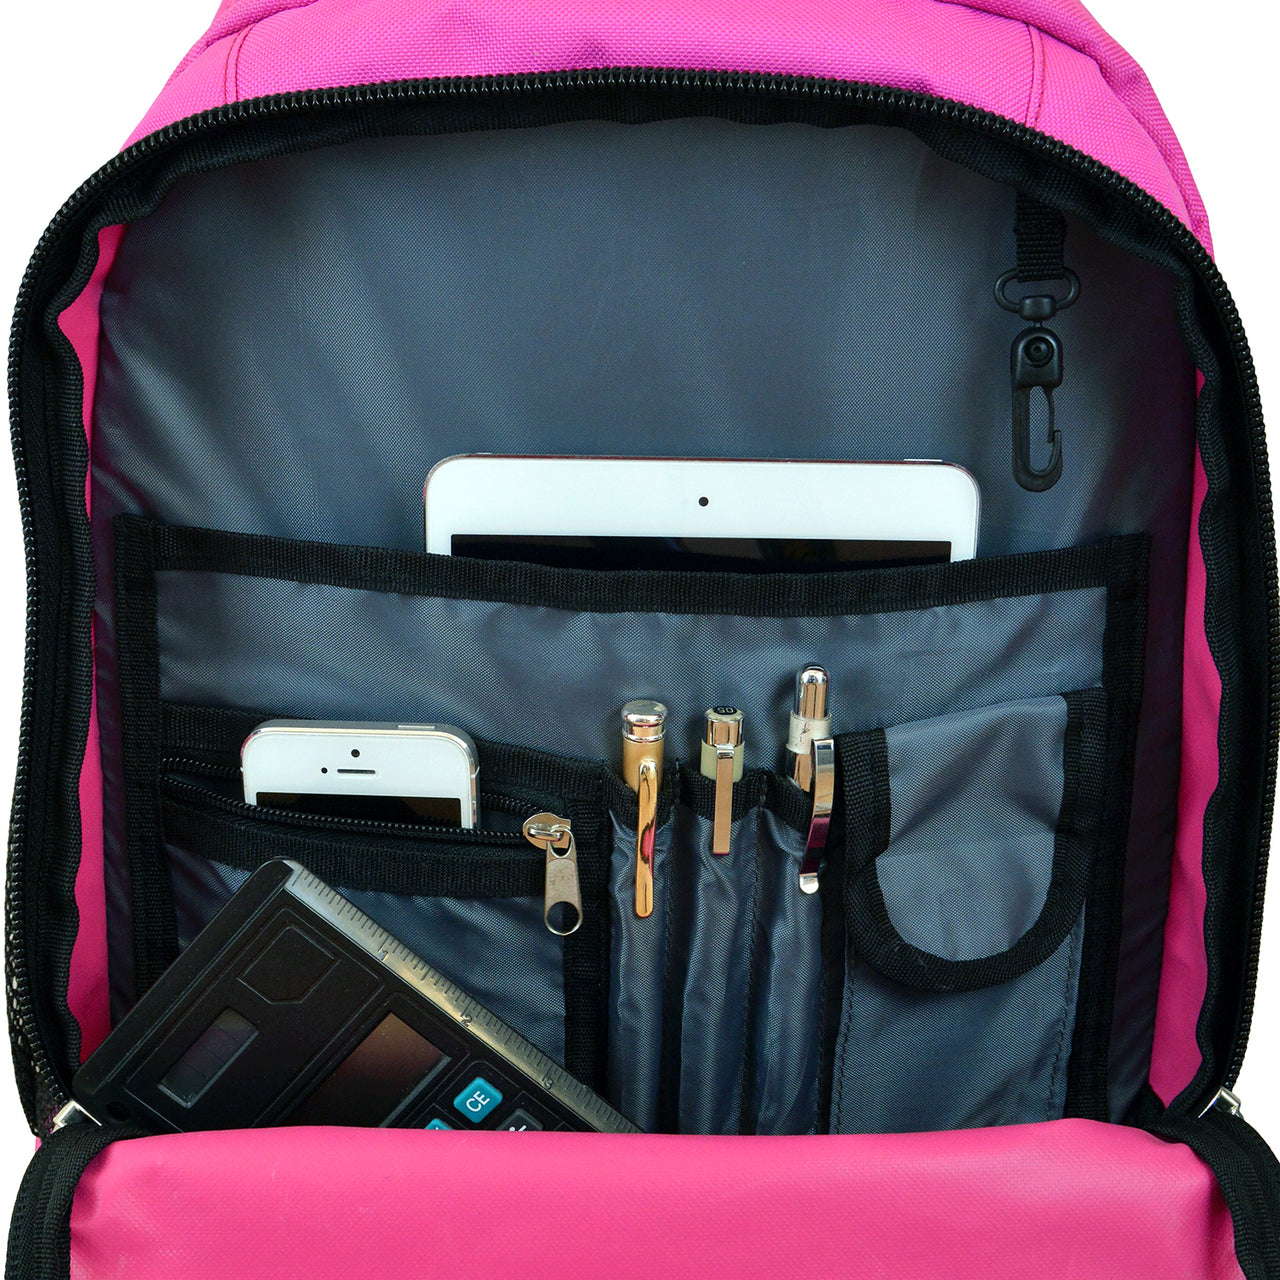 Syracuse Premium Wheeled Backpack in Pink